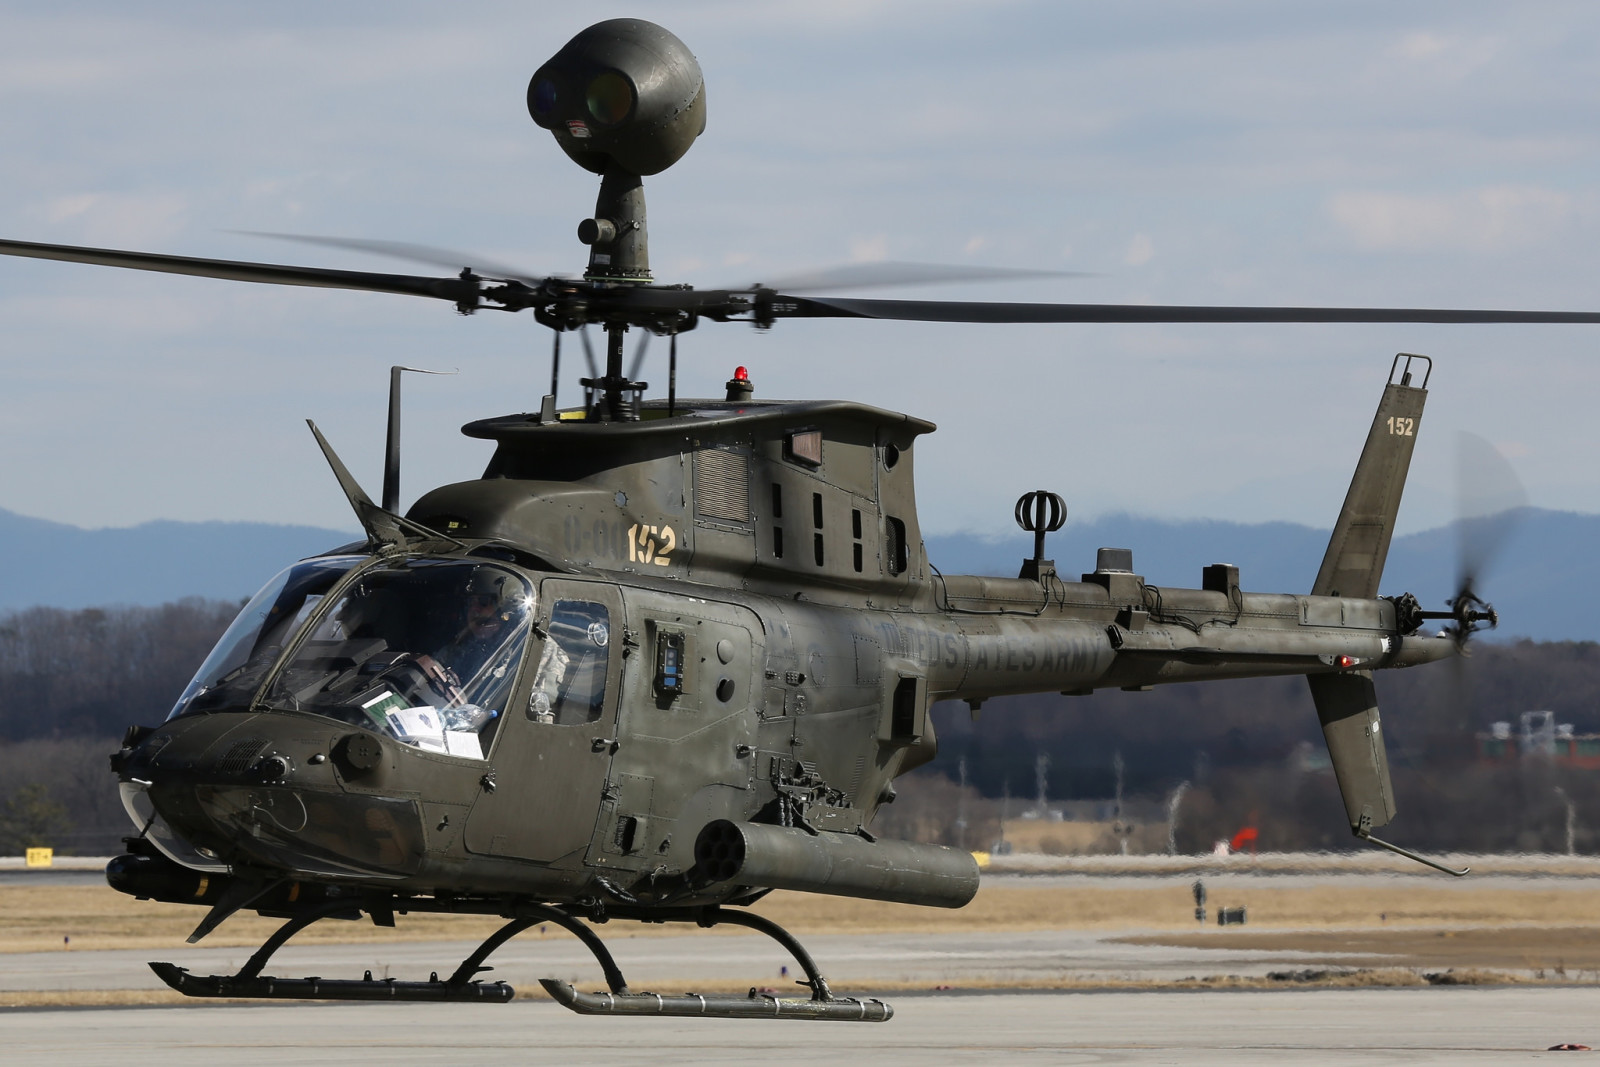 helikopter, lonceng, Amerika, mudah, Serba guna, OH-58, Kiowa